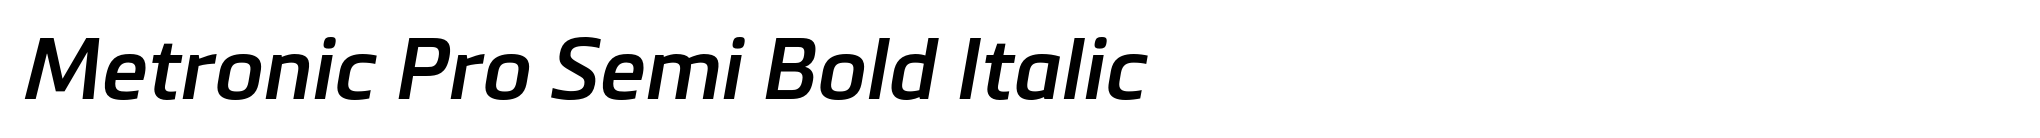 Metronic Pro Semi Bold Italic image